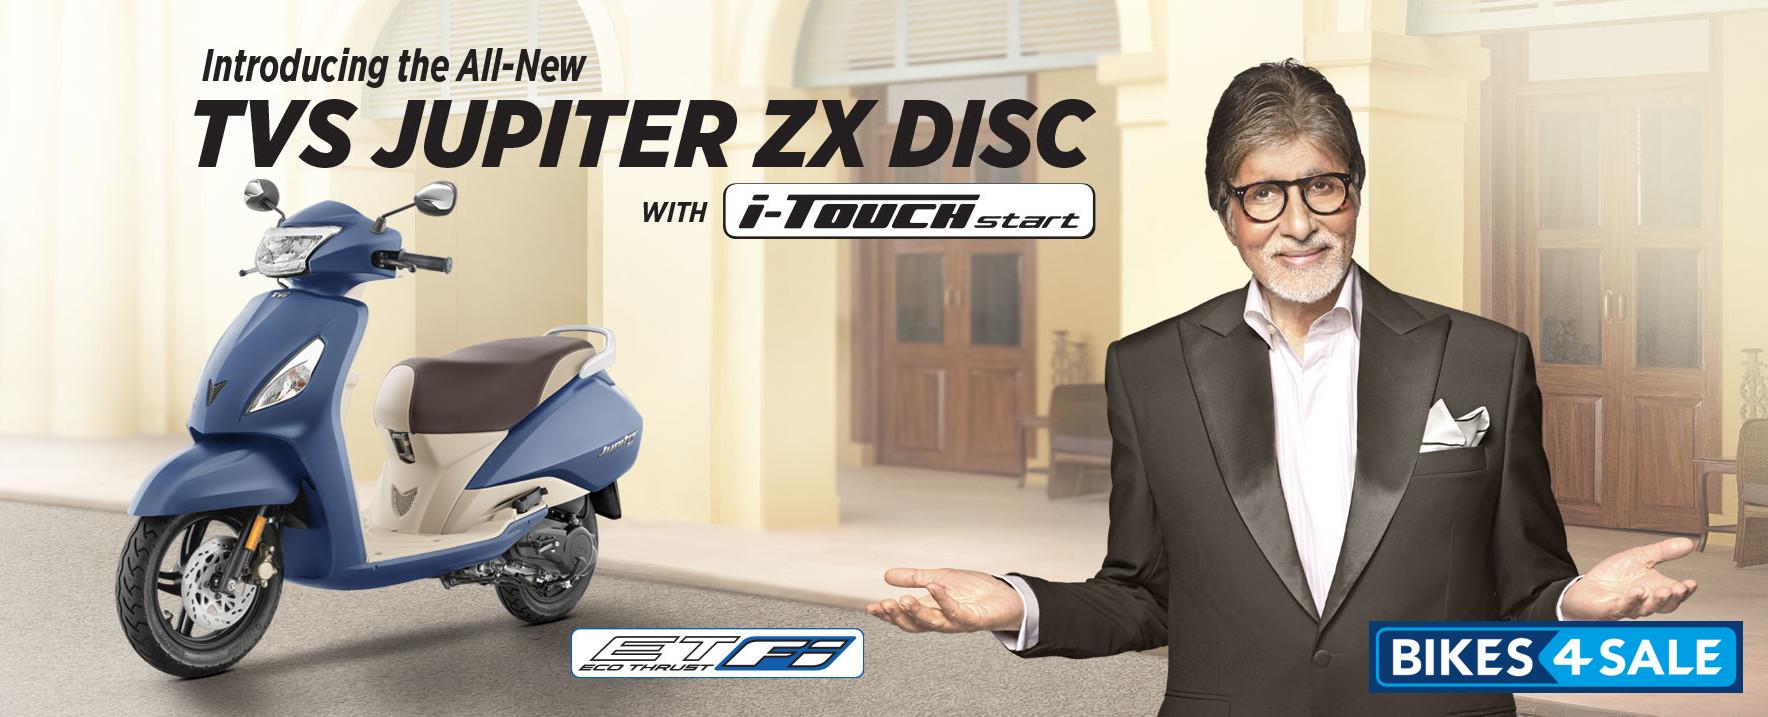 TVS Jupiter ZX Disc BS6